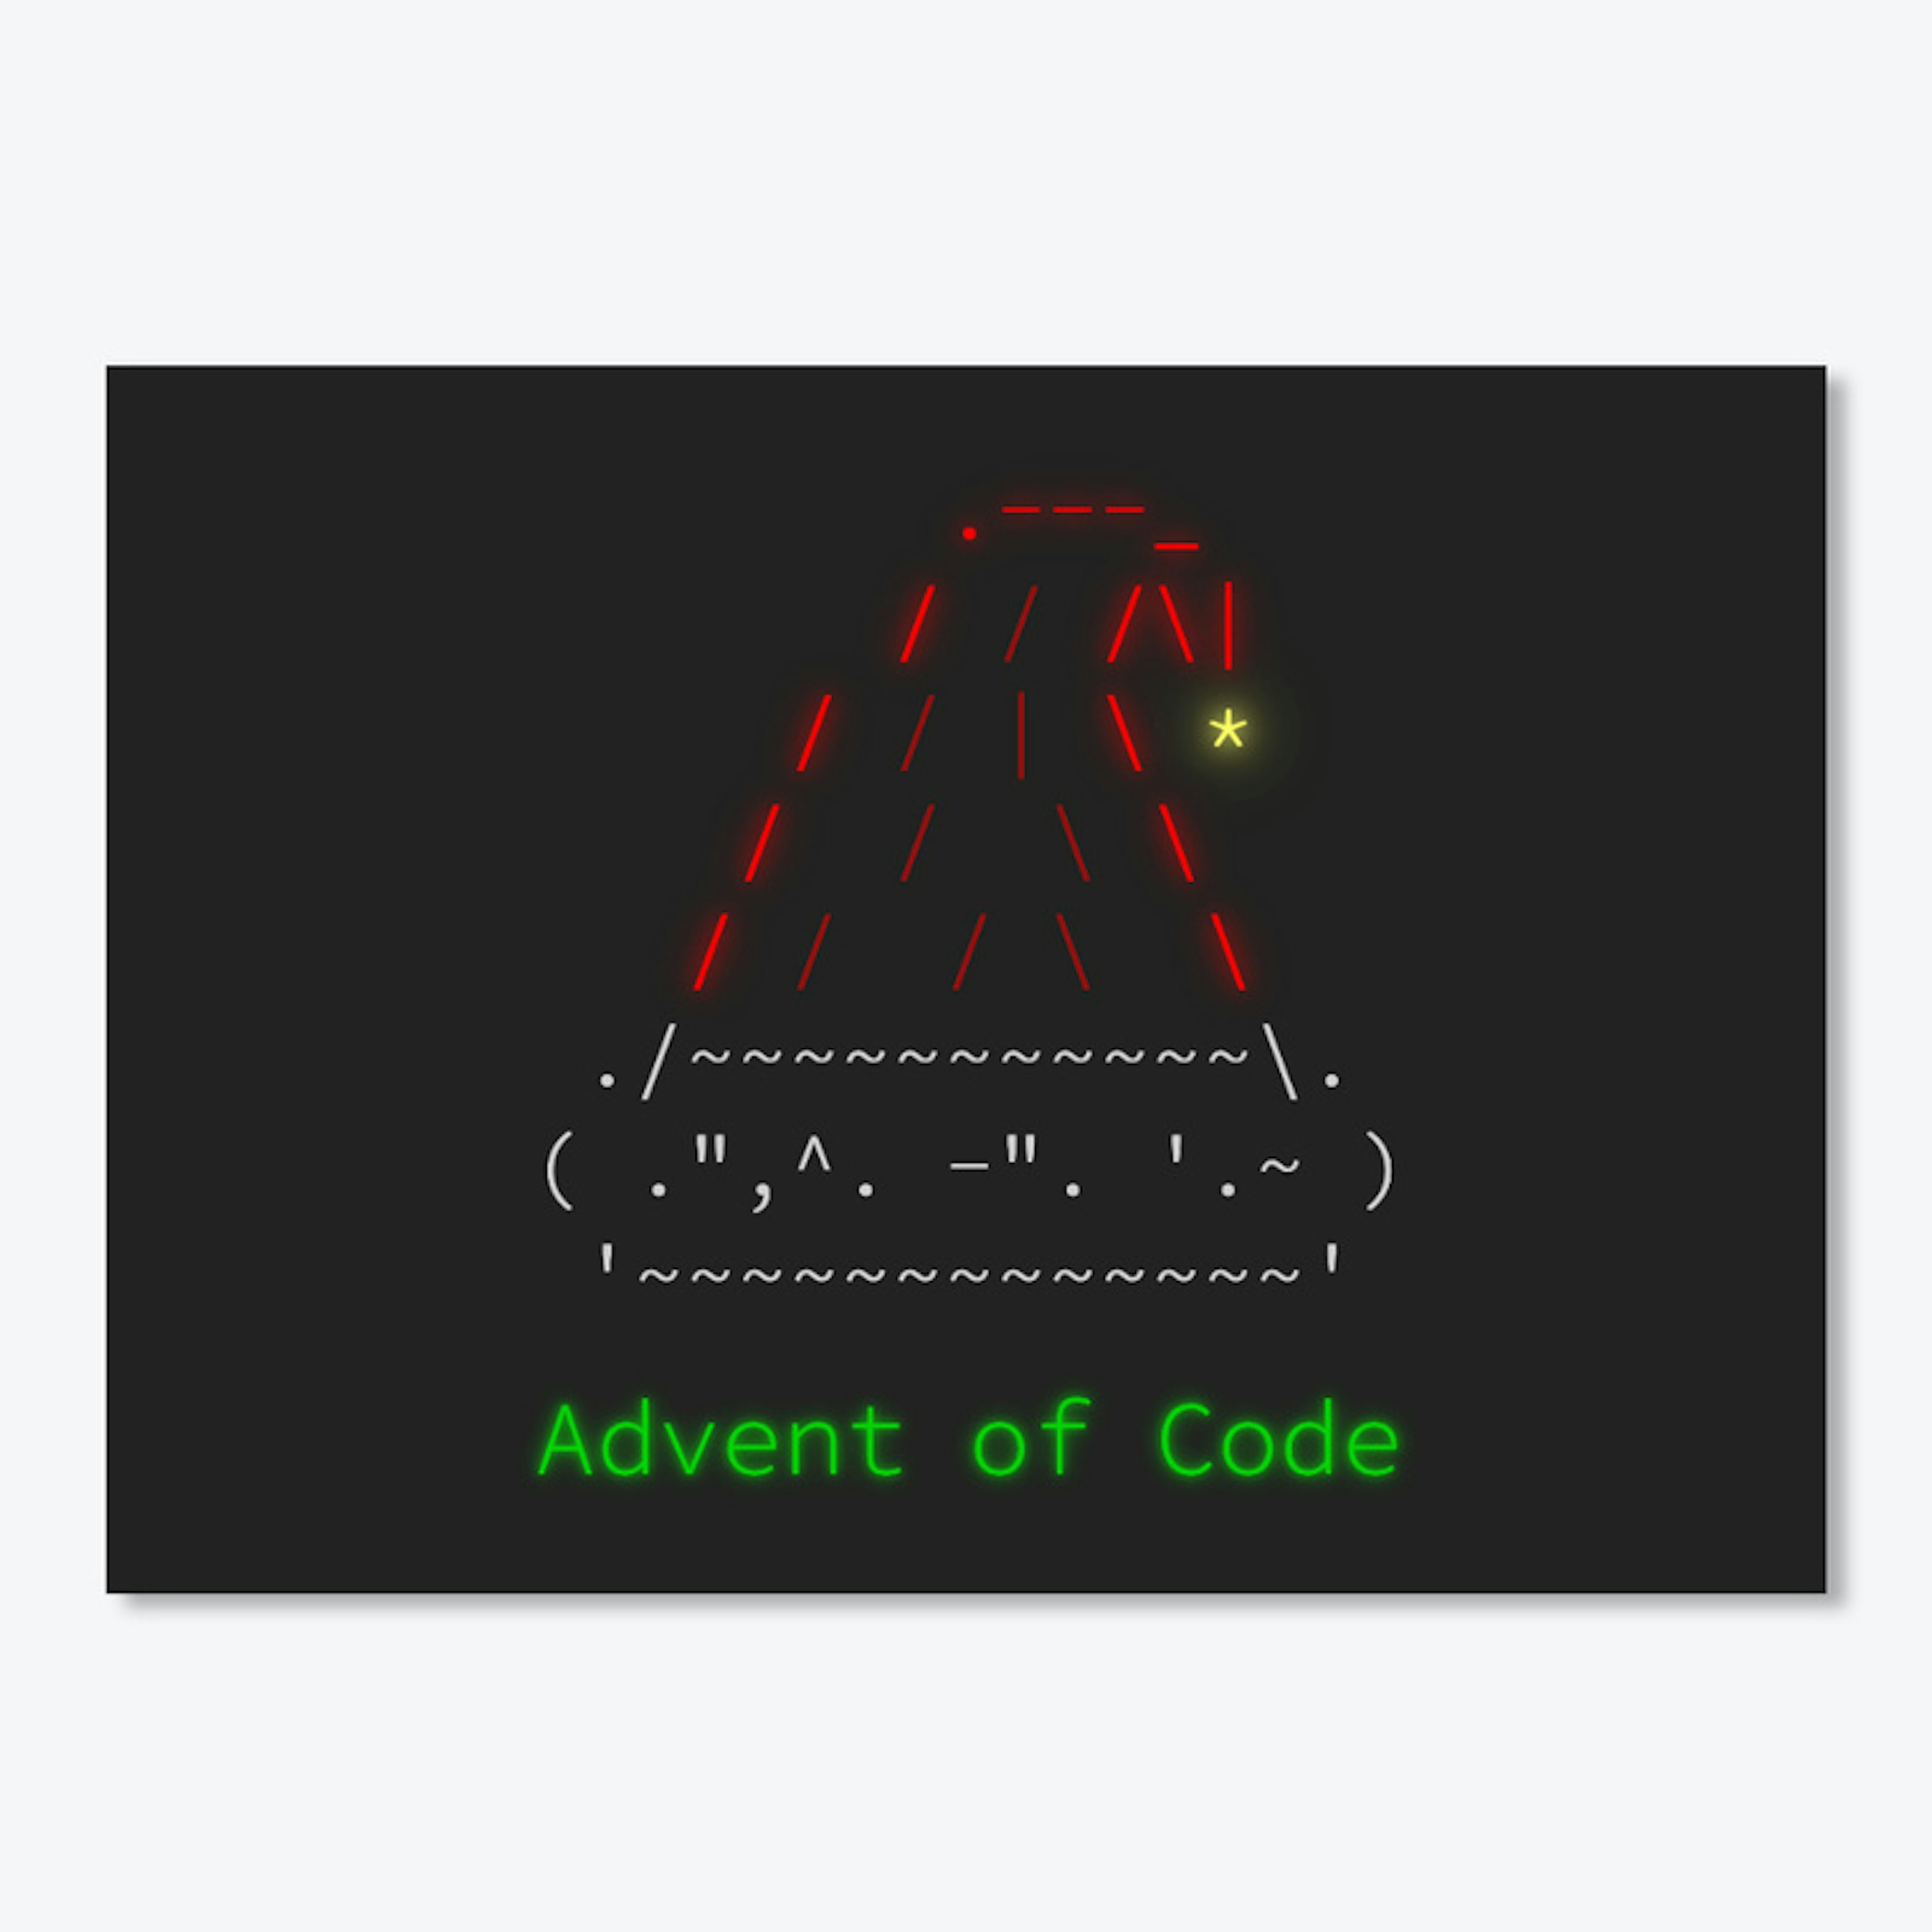 Advent of Code